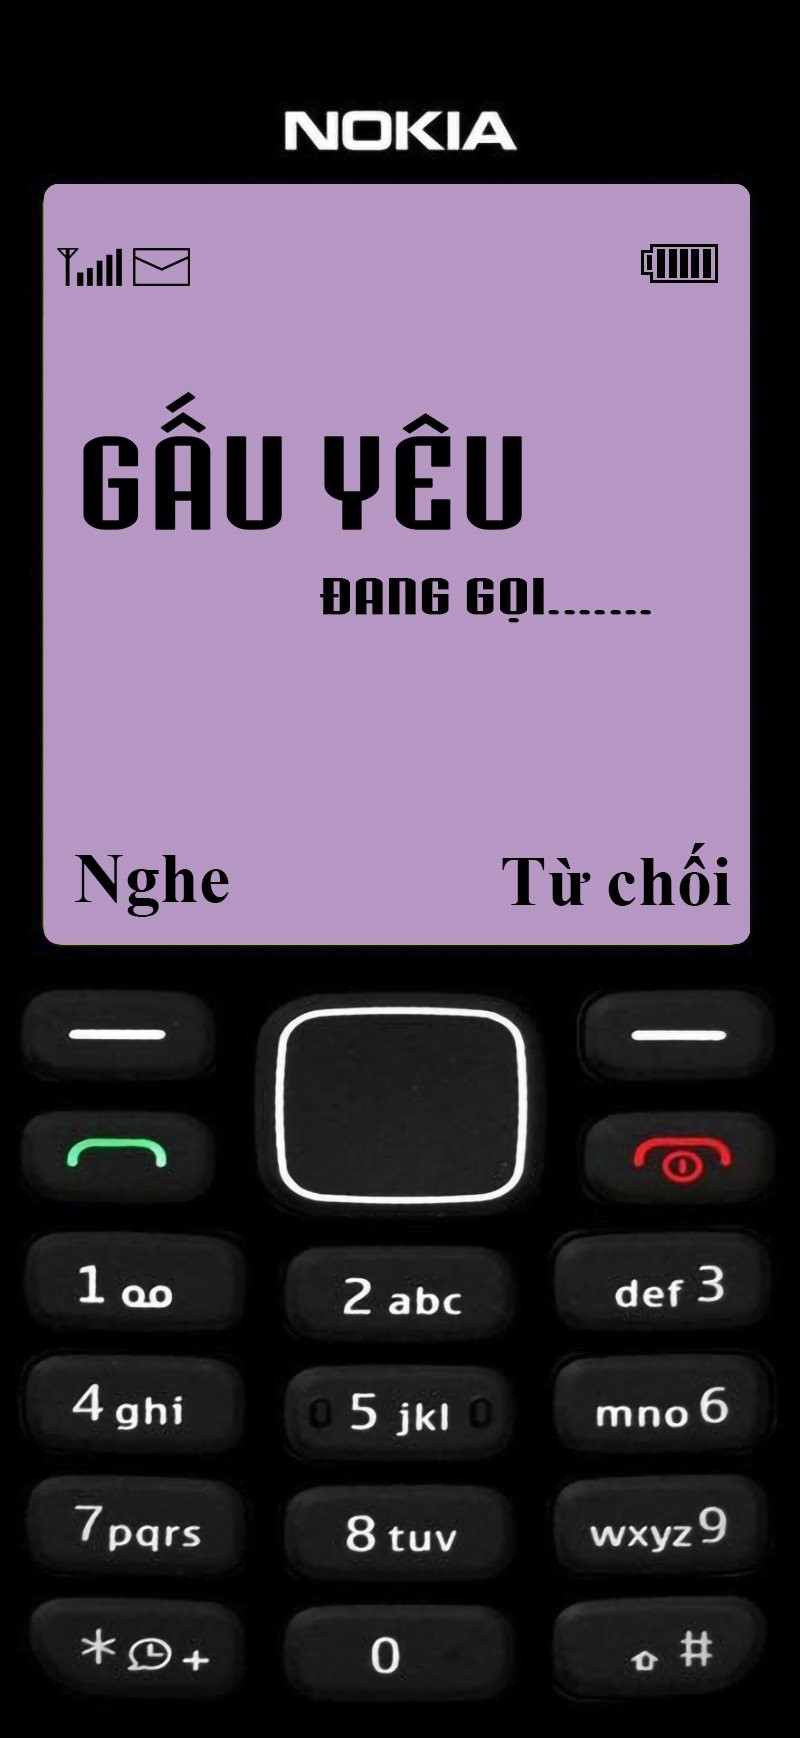 Tong hop hinh nen “cai trang” smartphone thanh Nokia 1280-Hinh-10